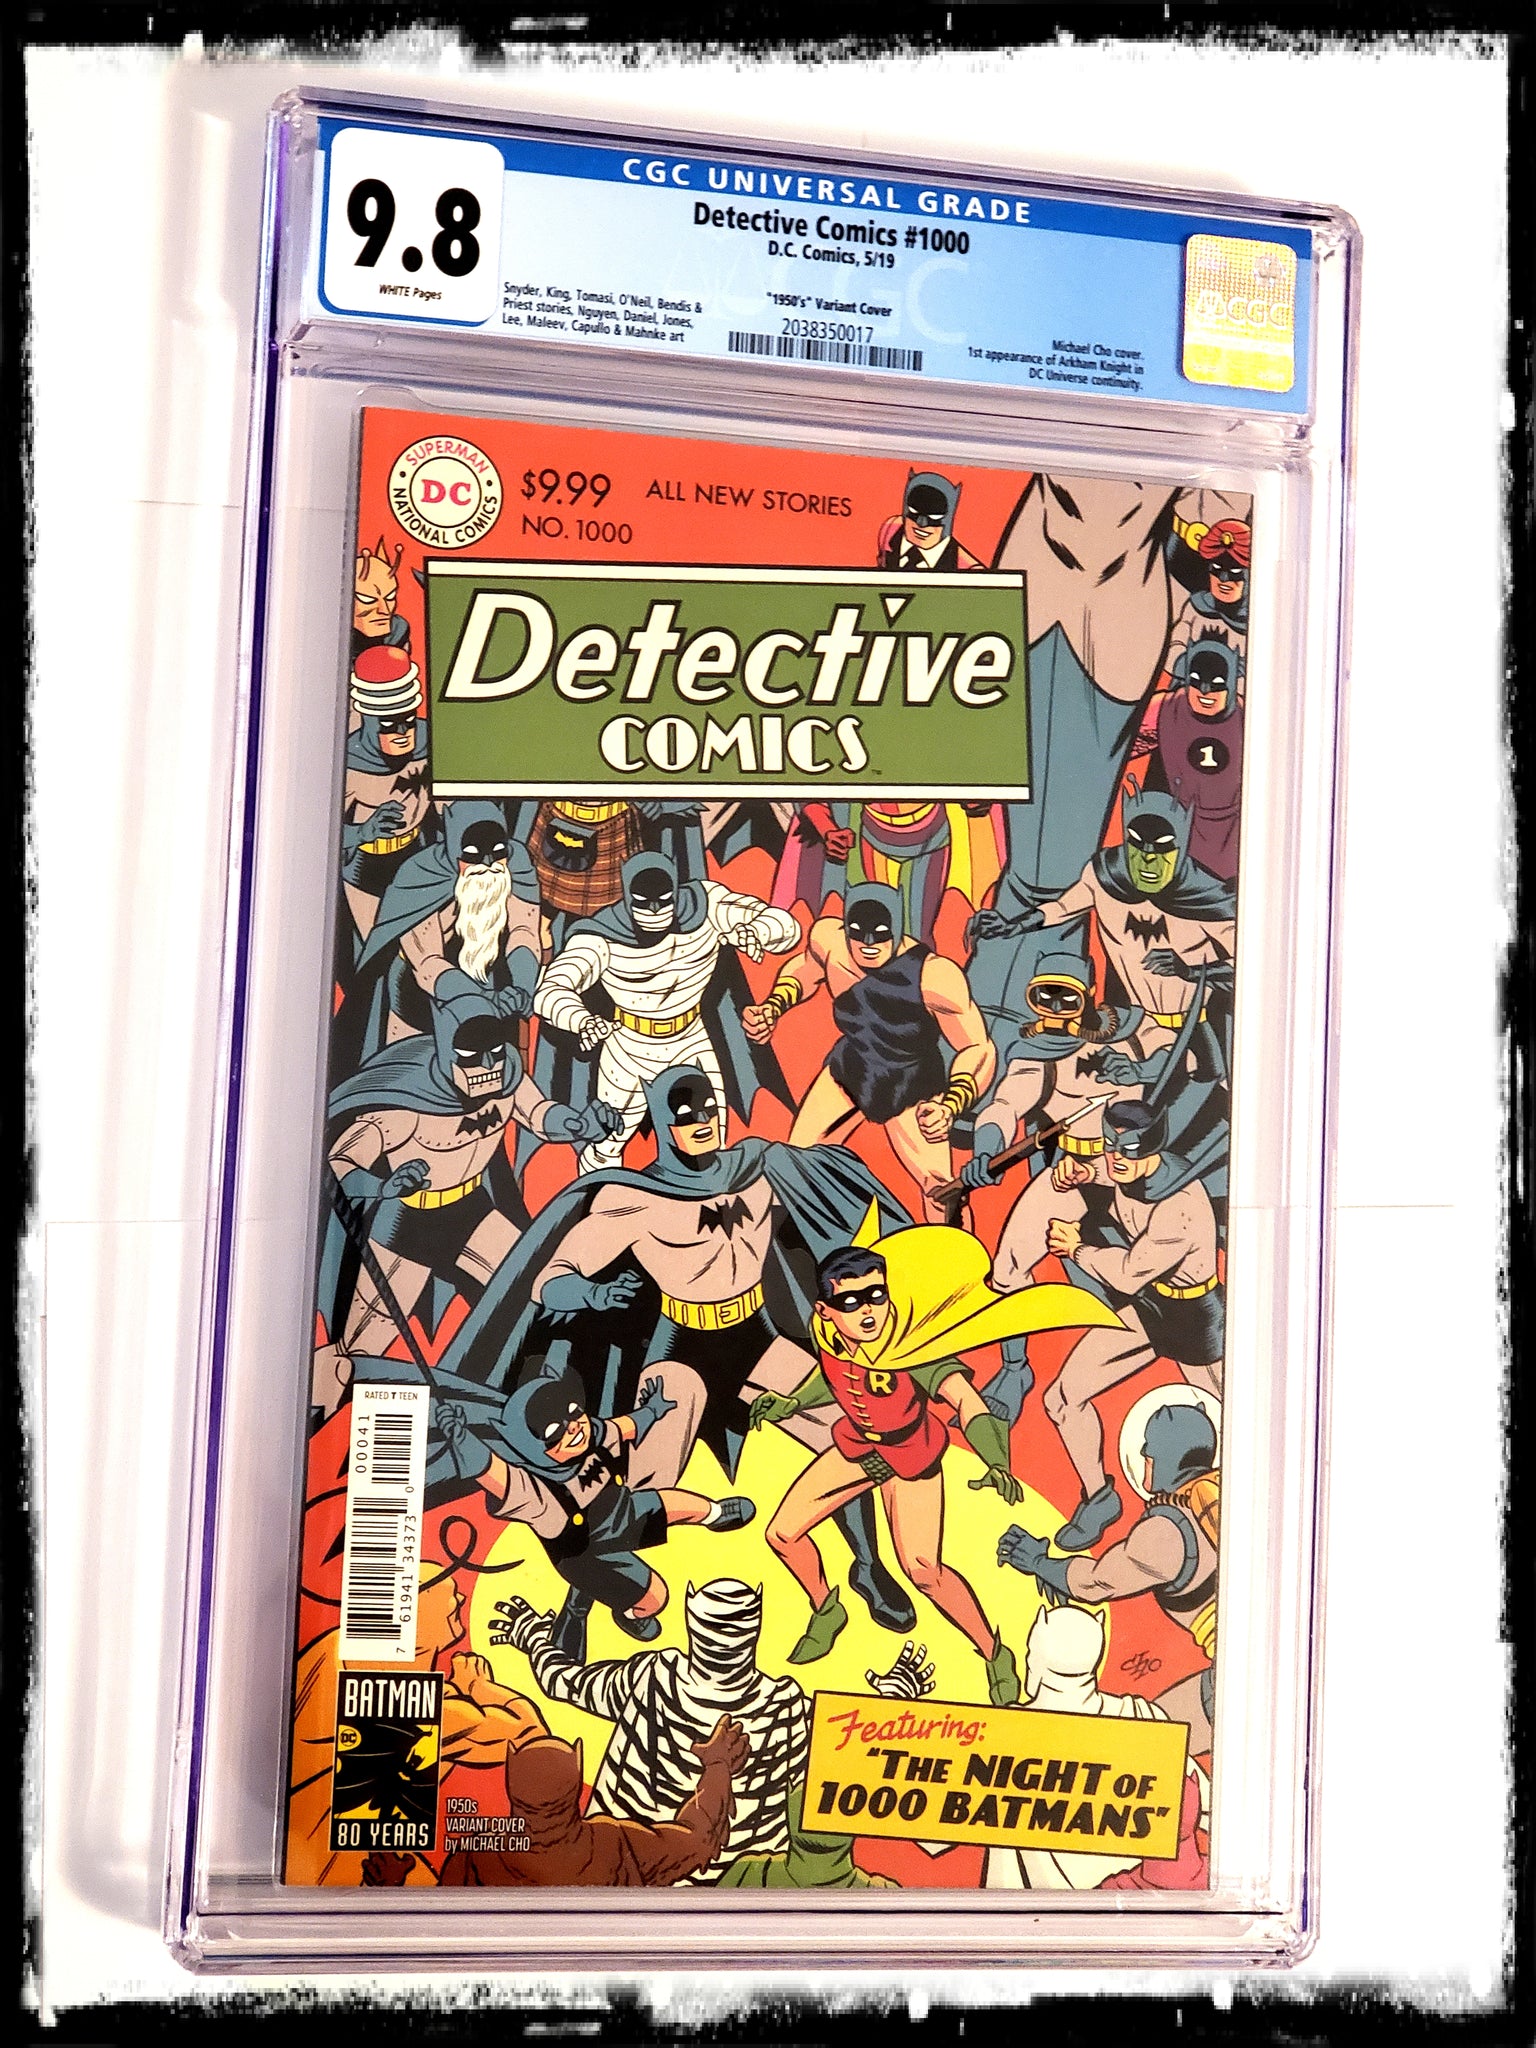 DETECTIVE COMICS #1000 MICHAEL CHO 1950'S VARIANT (GRADED CGC 9.8)